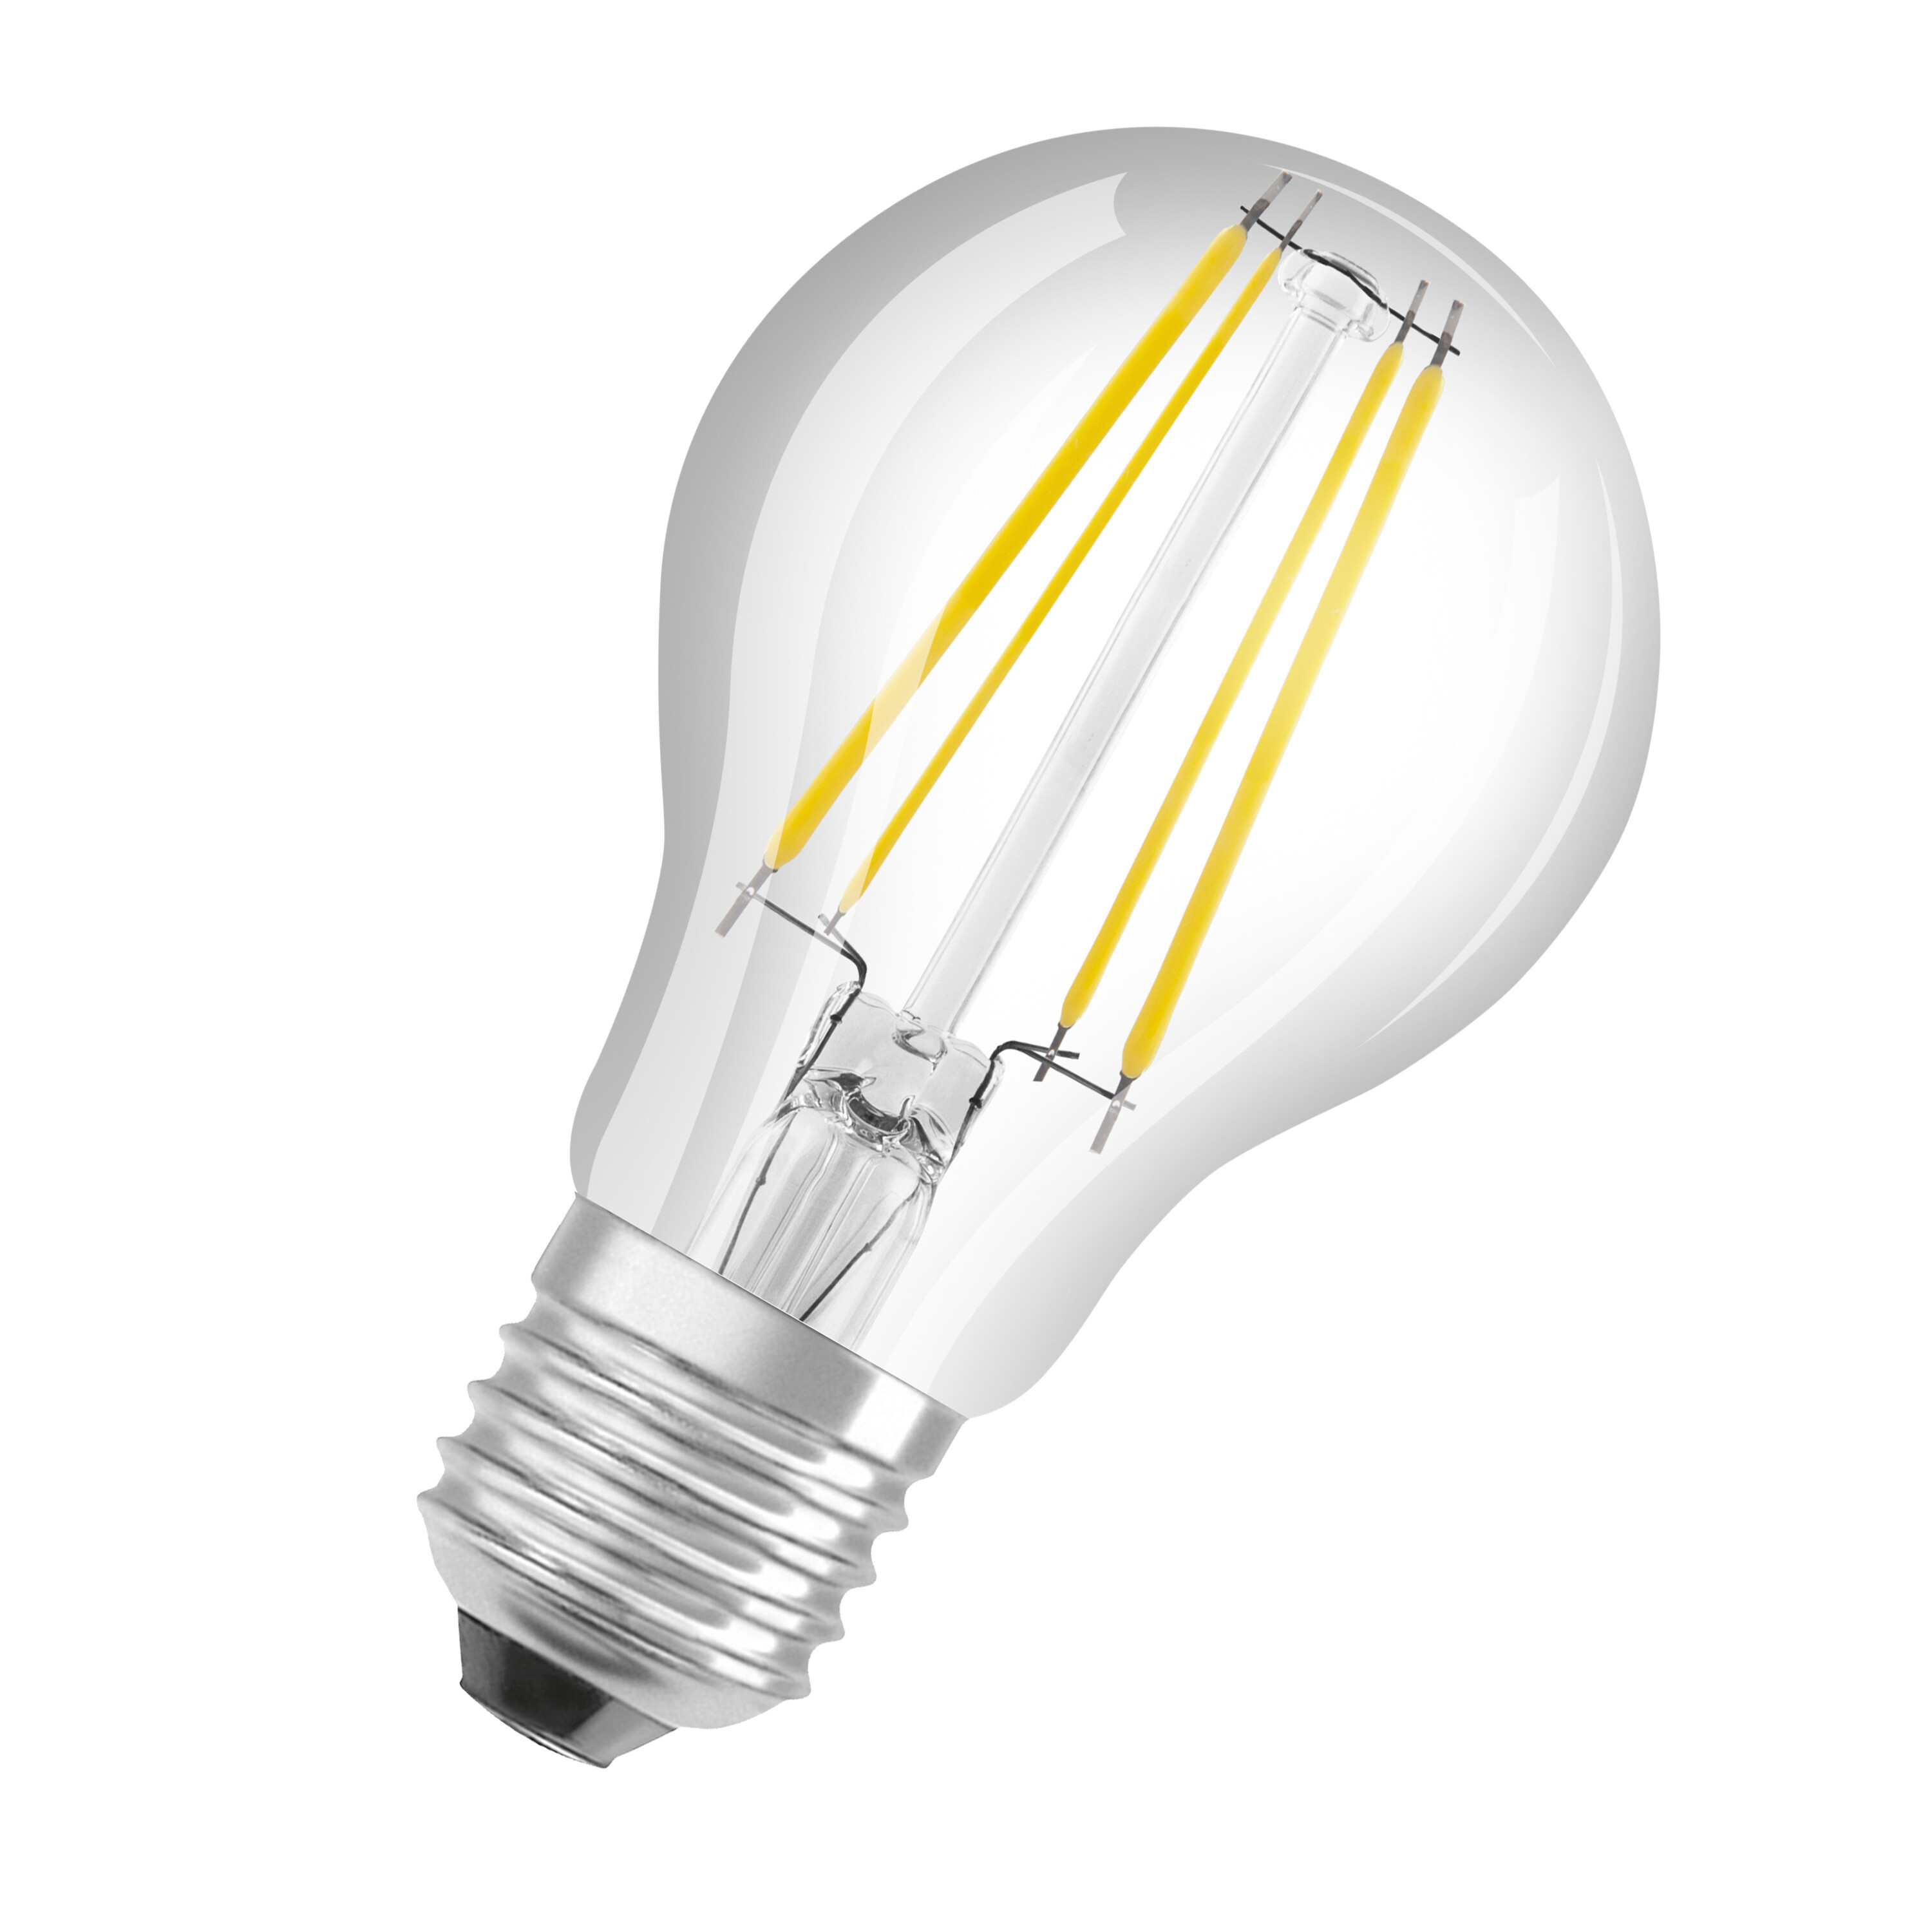 LEDVANCE LED LAMPS ENERGY EFFICIENT FILAMENT Lampe 525 LED CLASSIC ULTRA Warmweiß A Lumen